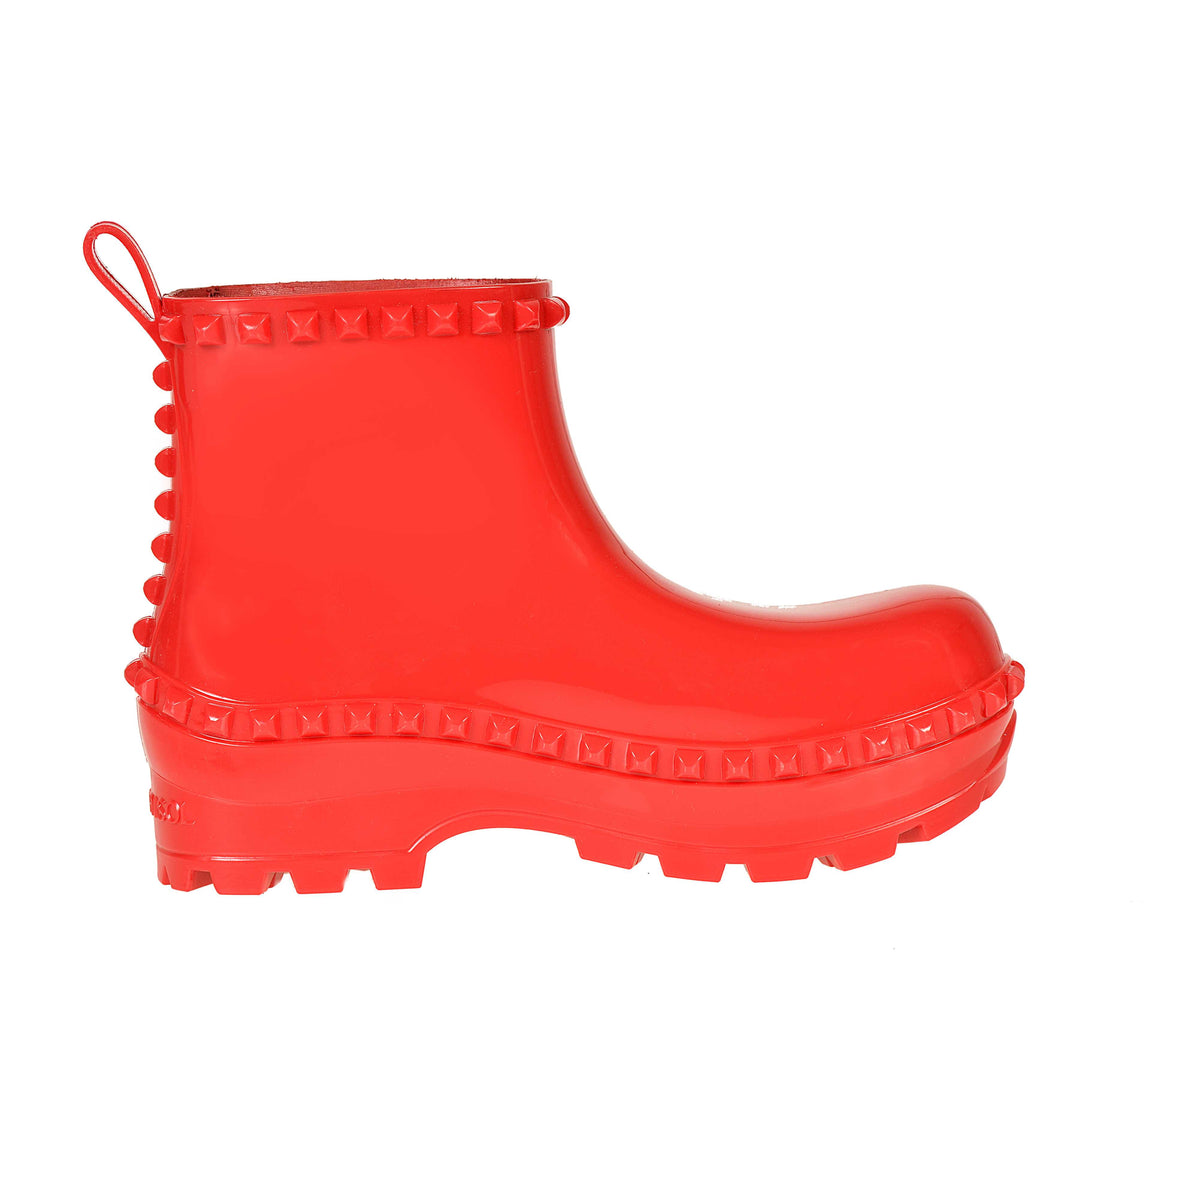 Bottega puddle boots review 